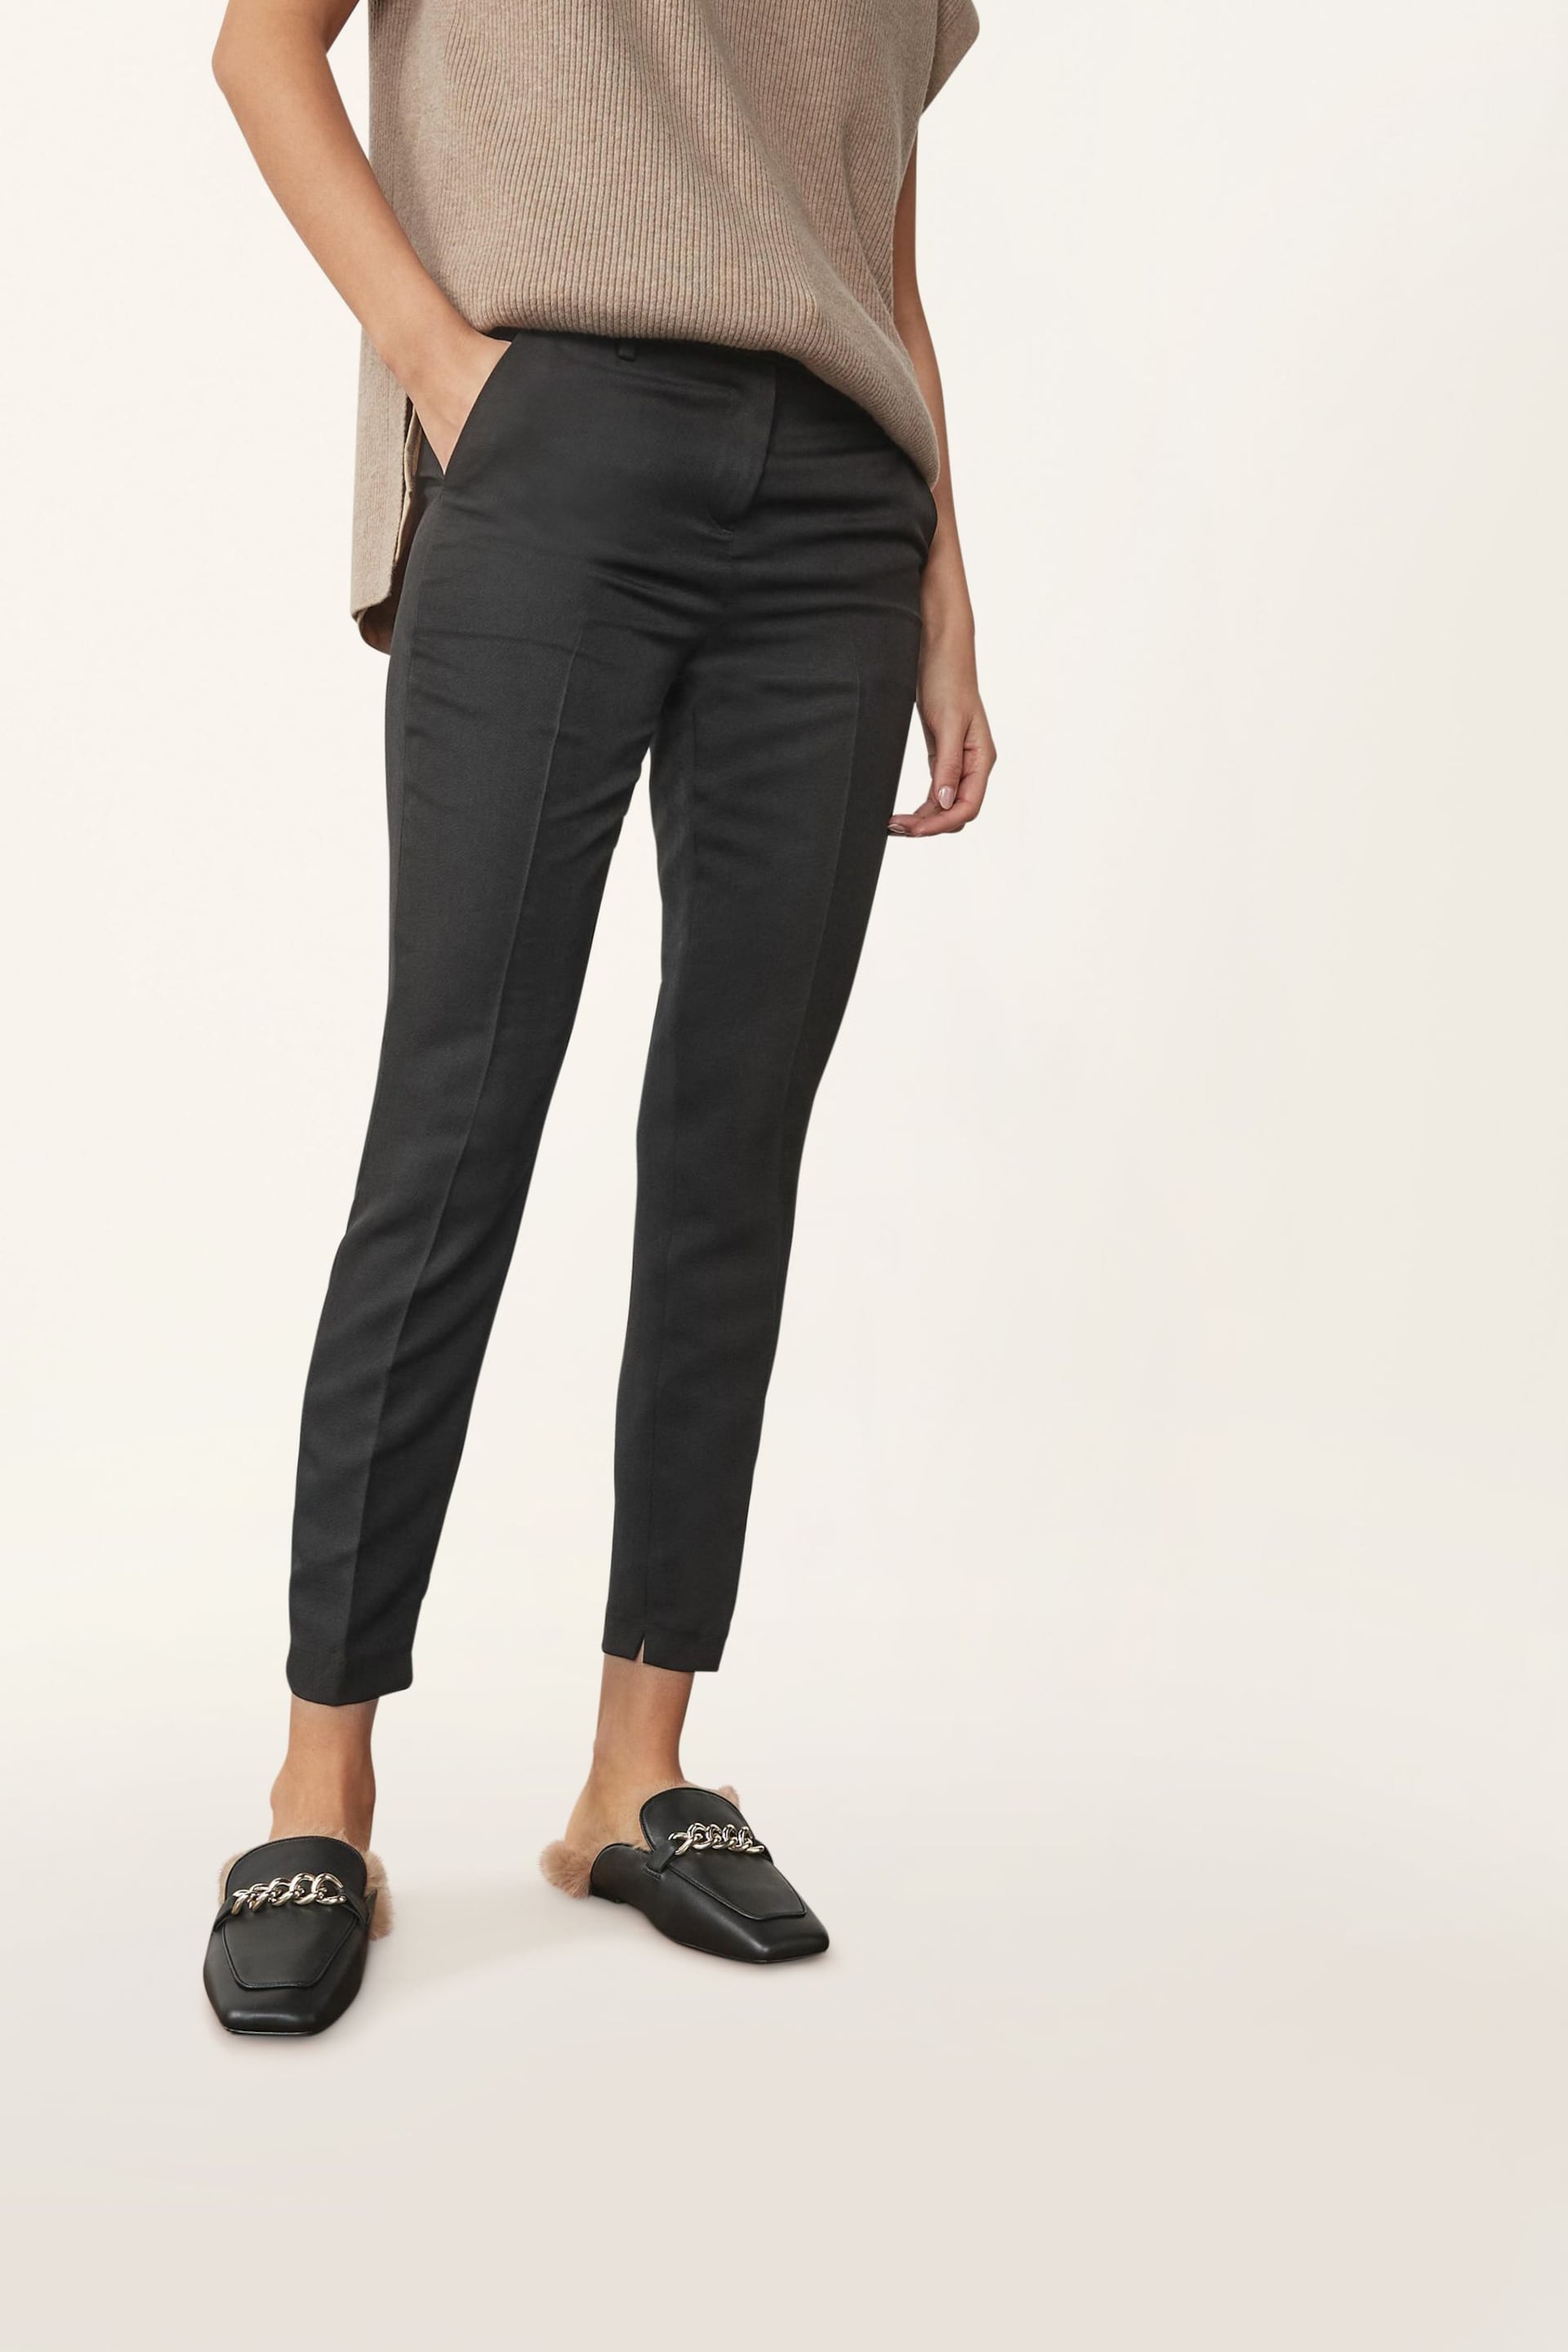 Black Slim Trousers - Image 1 of 3